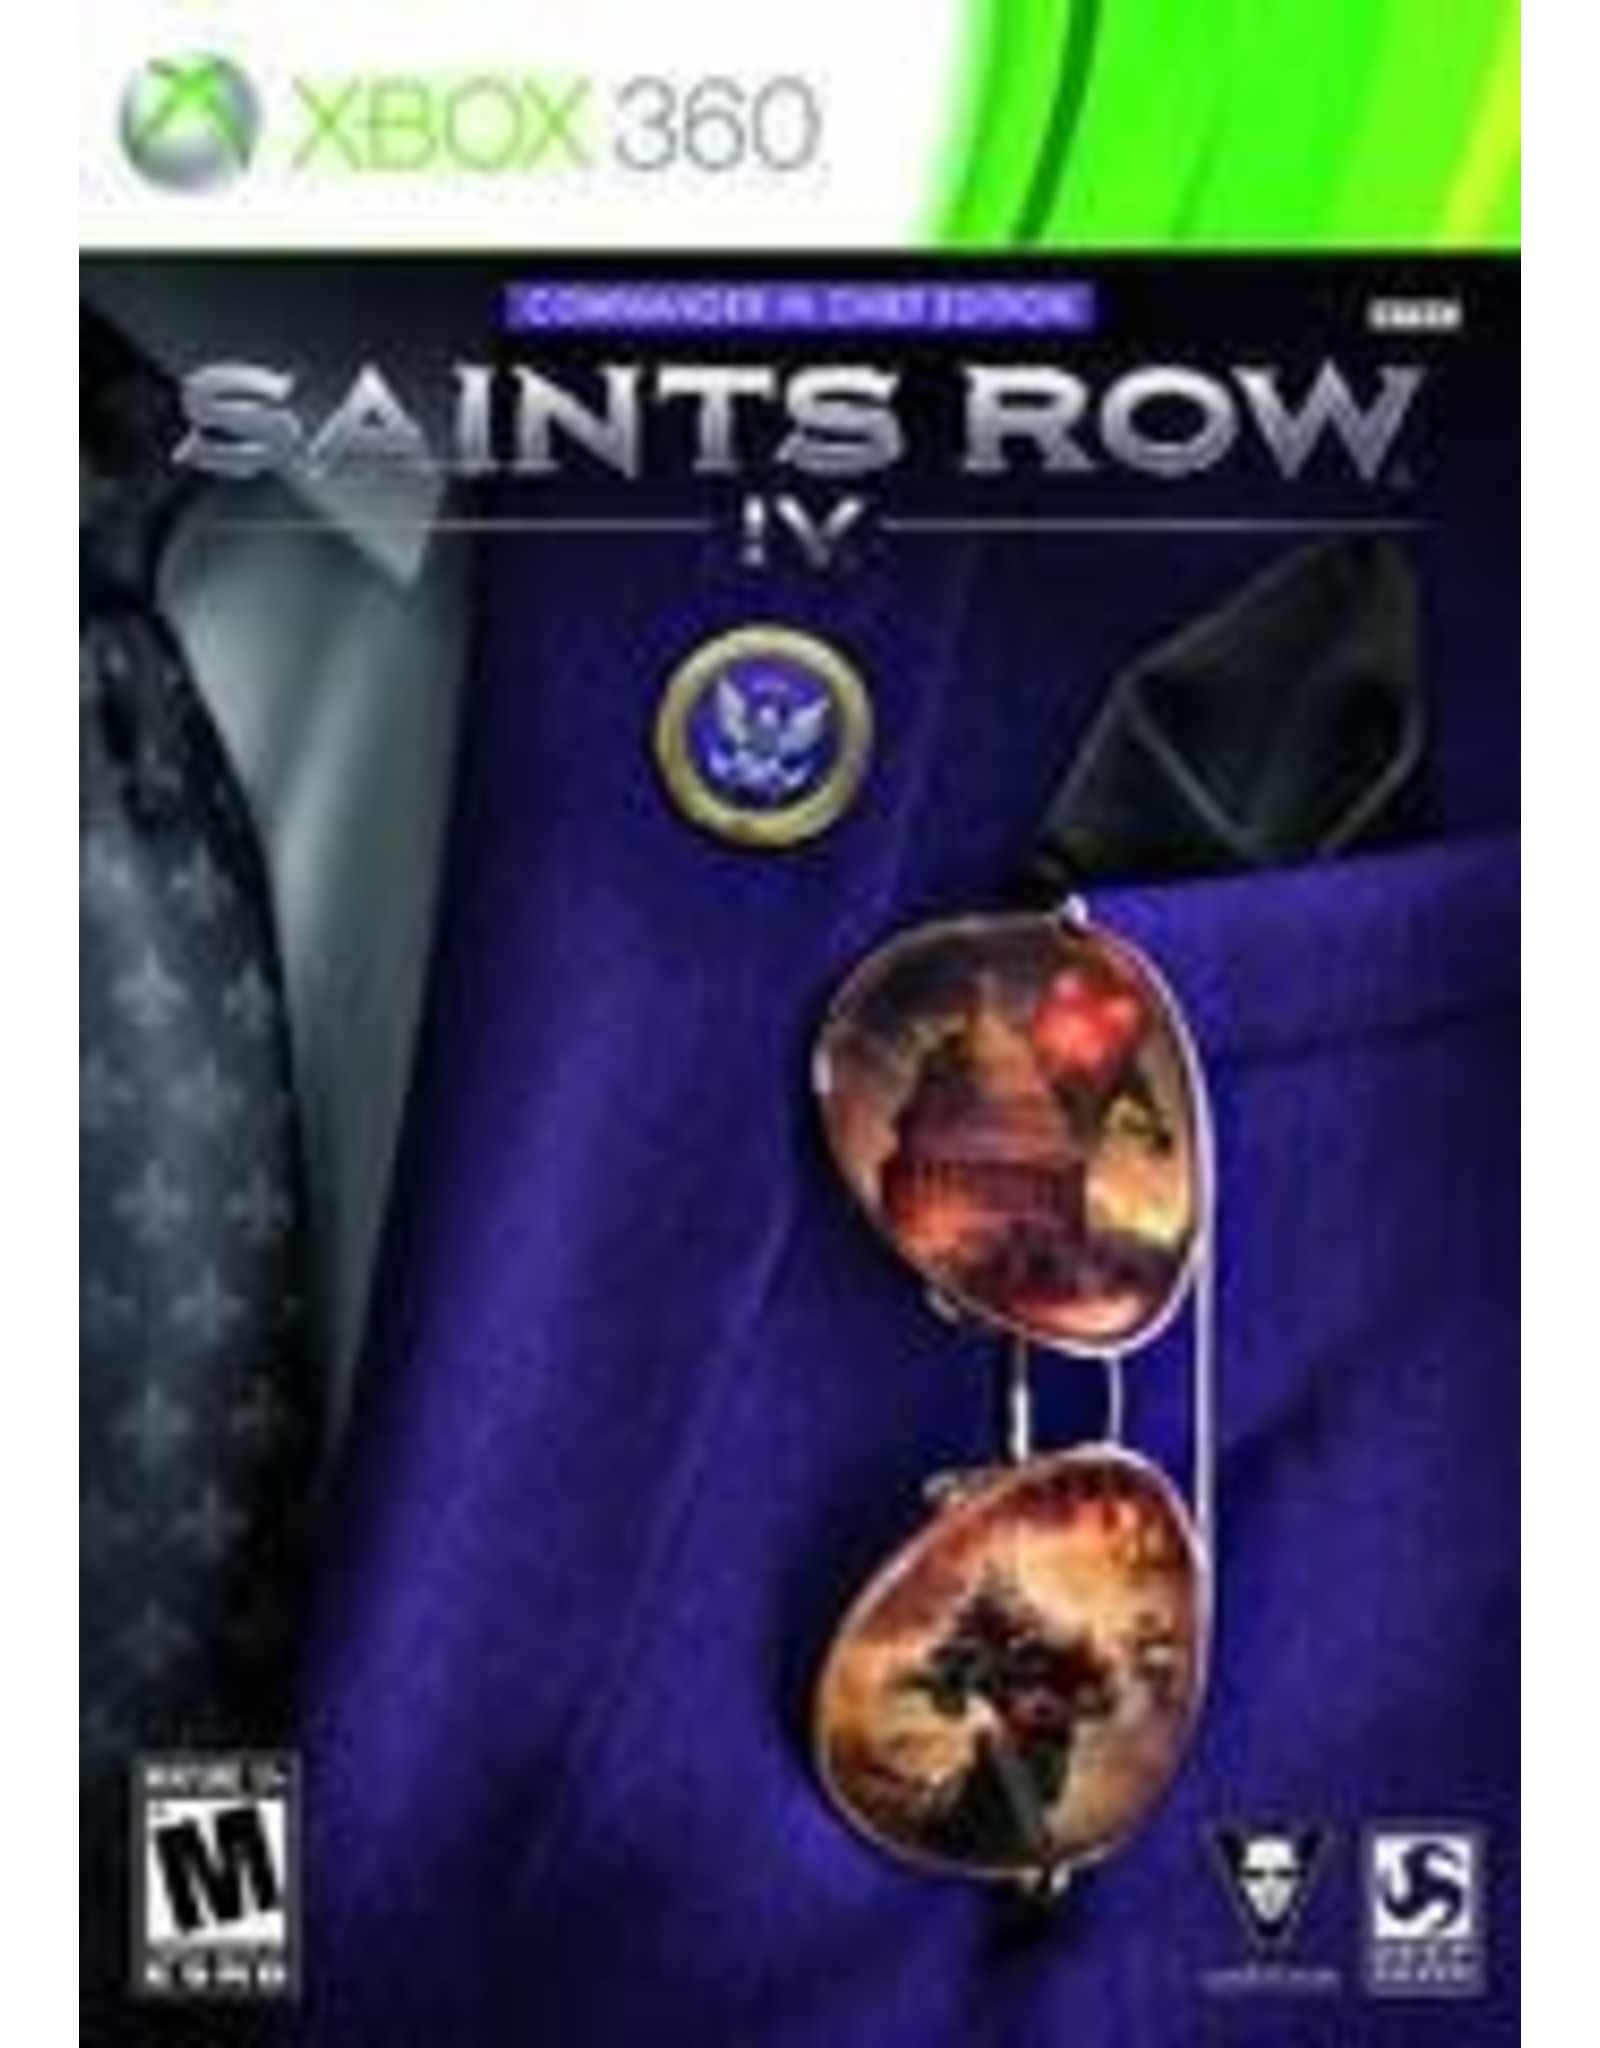 Xbox 360 Saints Row IV: Commander in Chief Edition (CiB, No DLC)